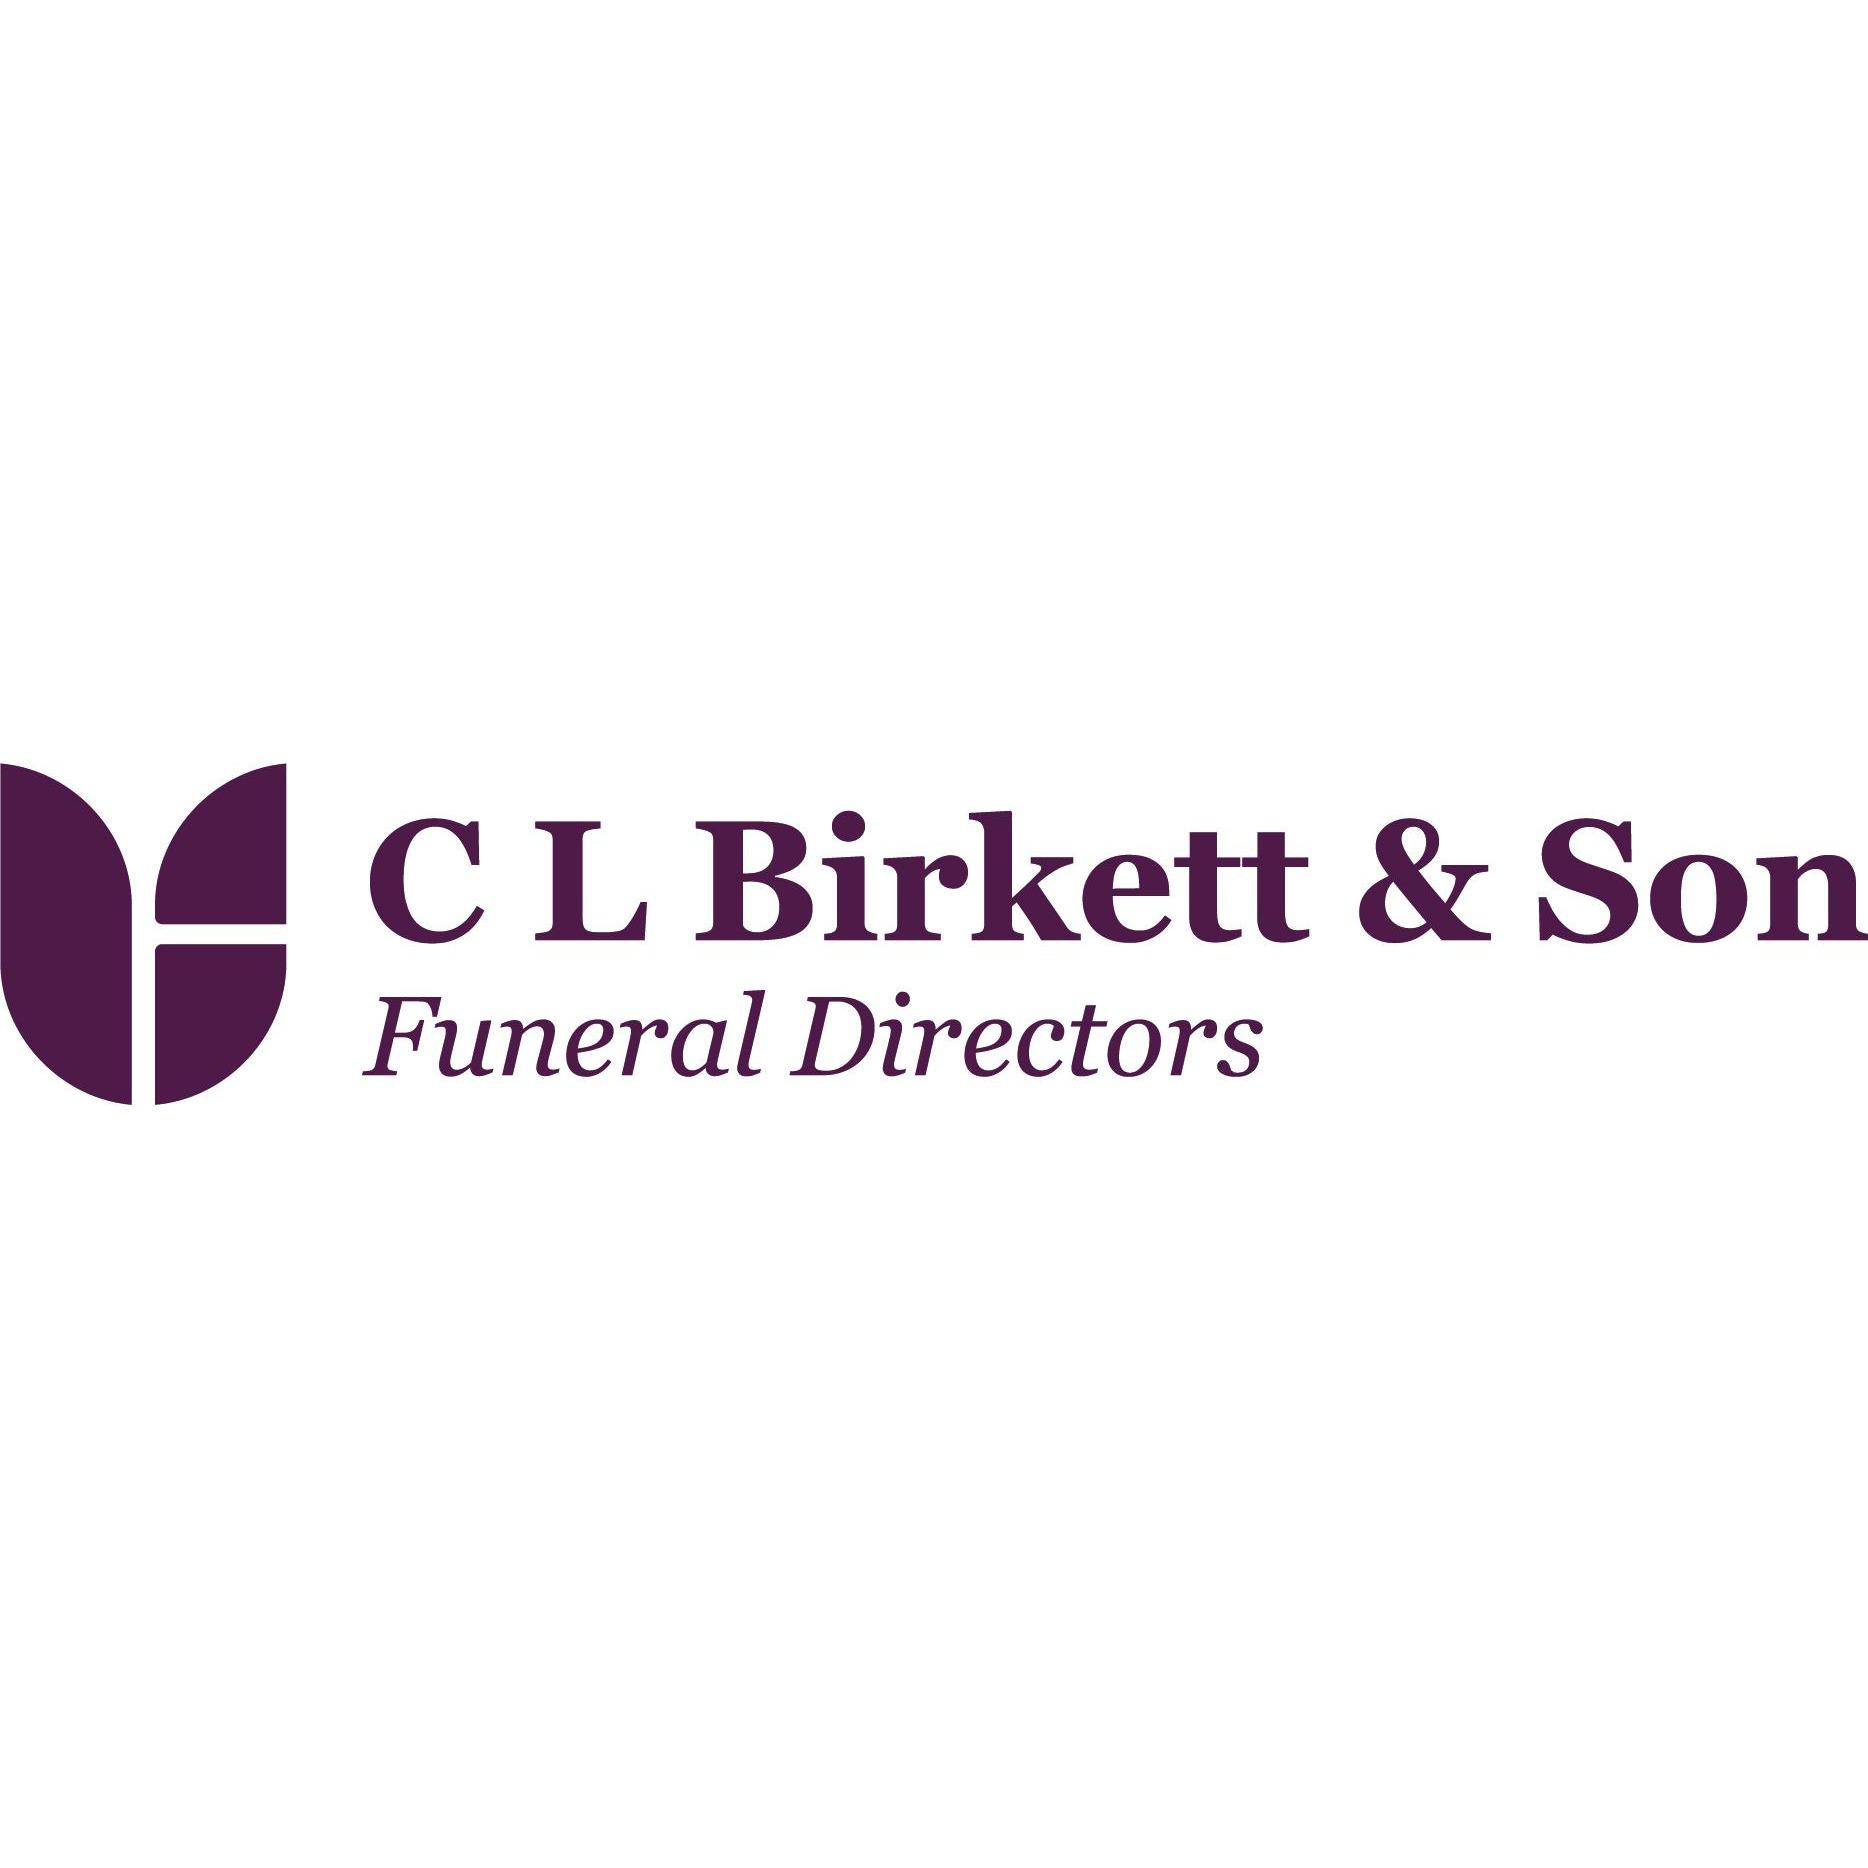 C L Birkett & Son Funeral Directors - Manchester, Lancashire M32 8DN - 01615 070194 | ShowMeLocal.com